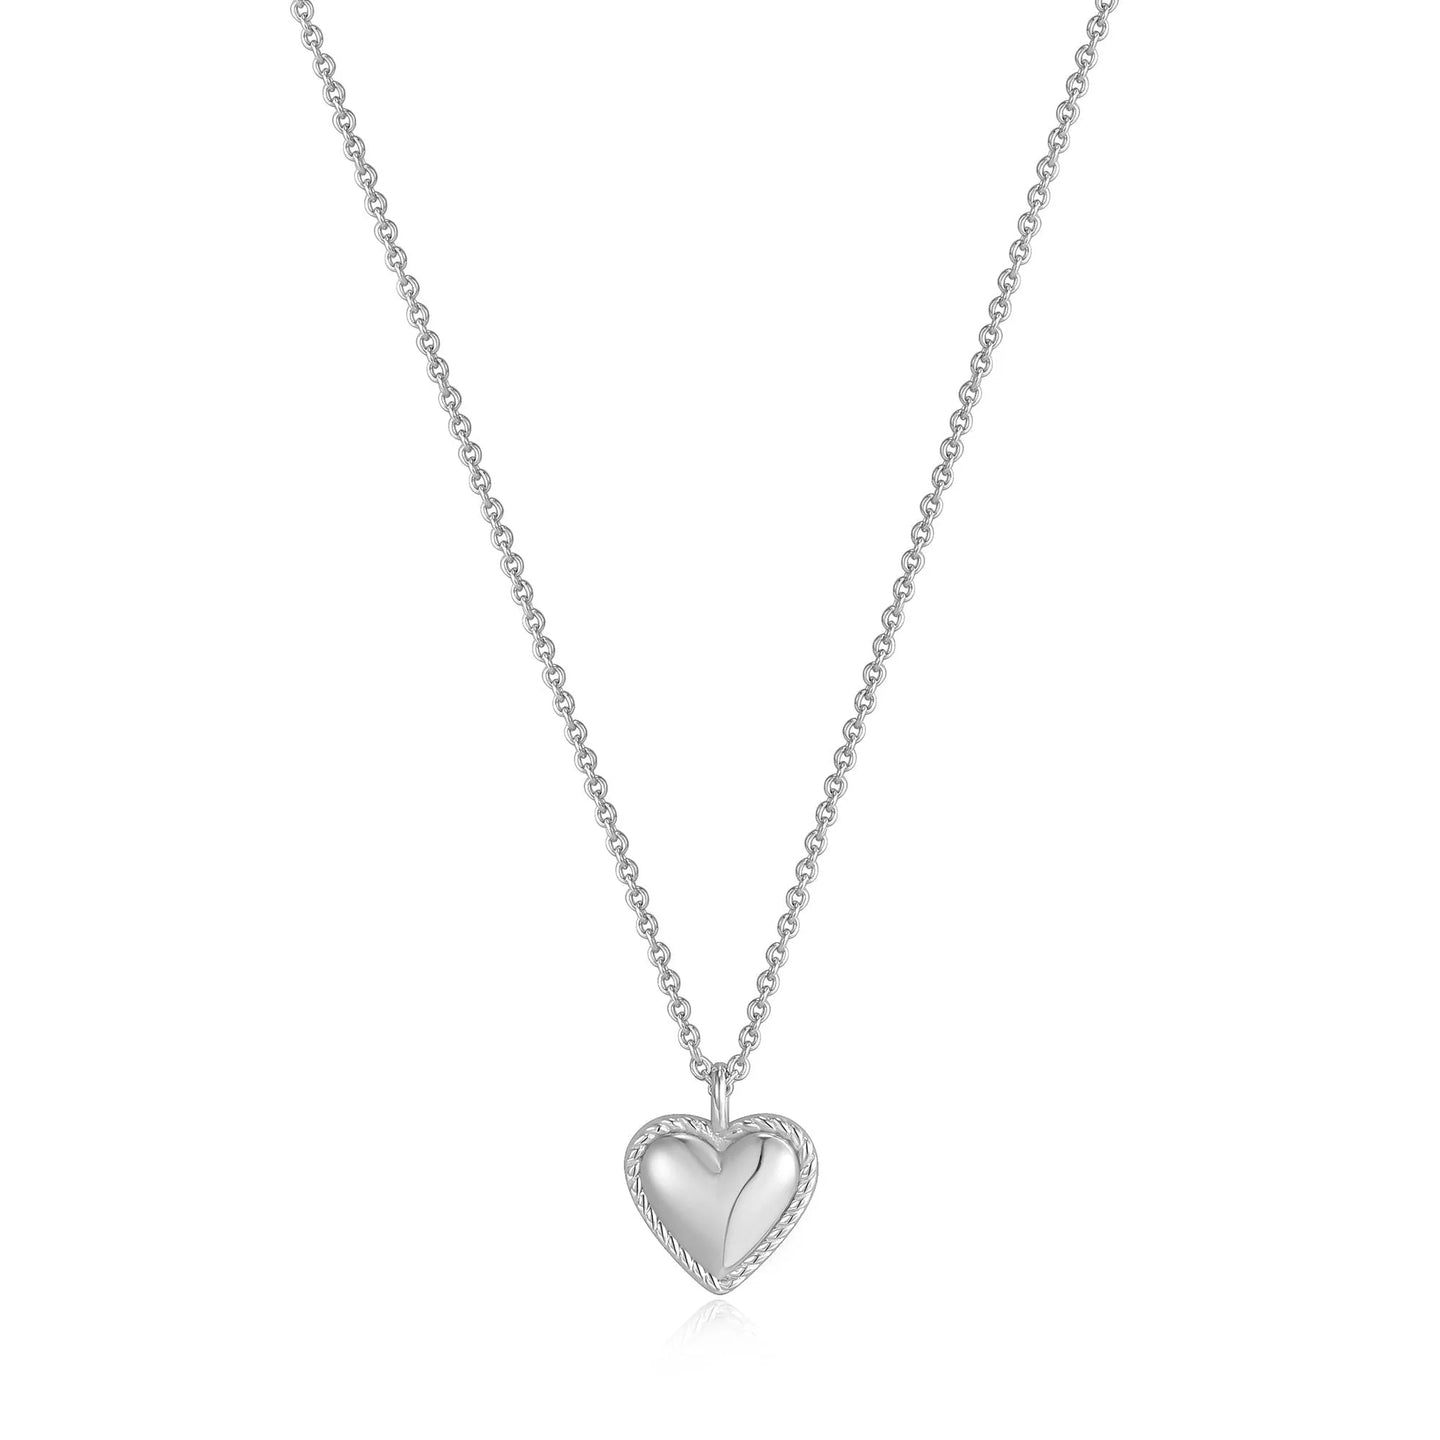 Ropes & Dreams Silver Heart Necklace